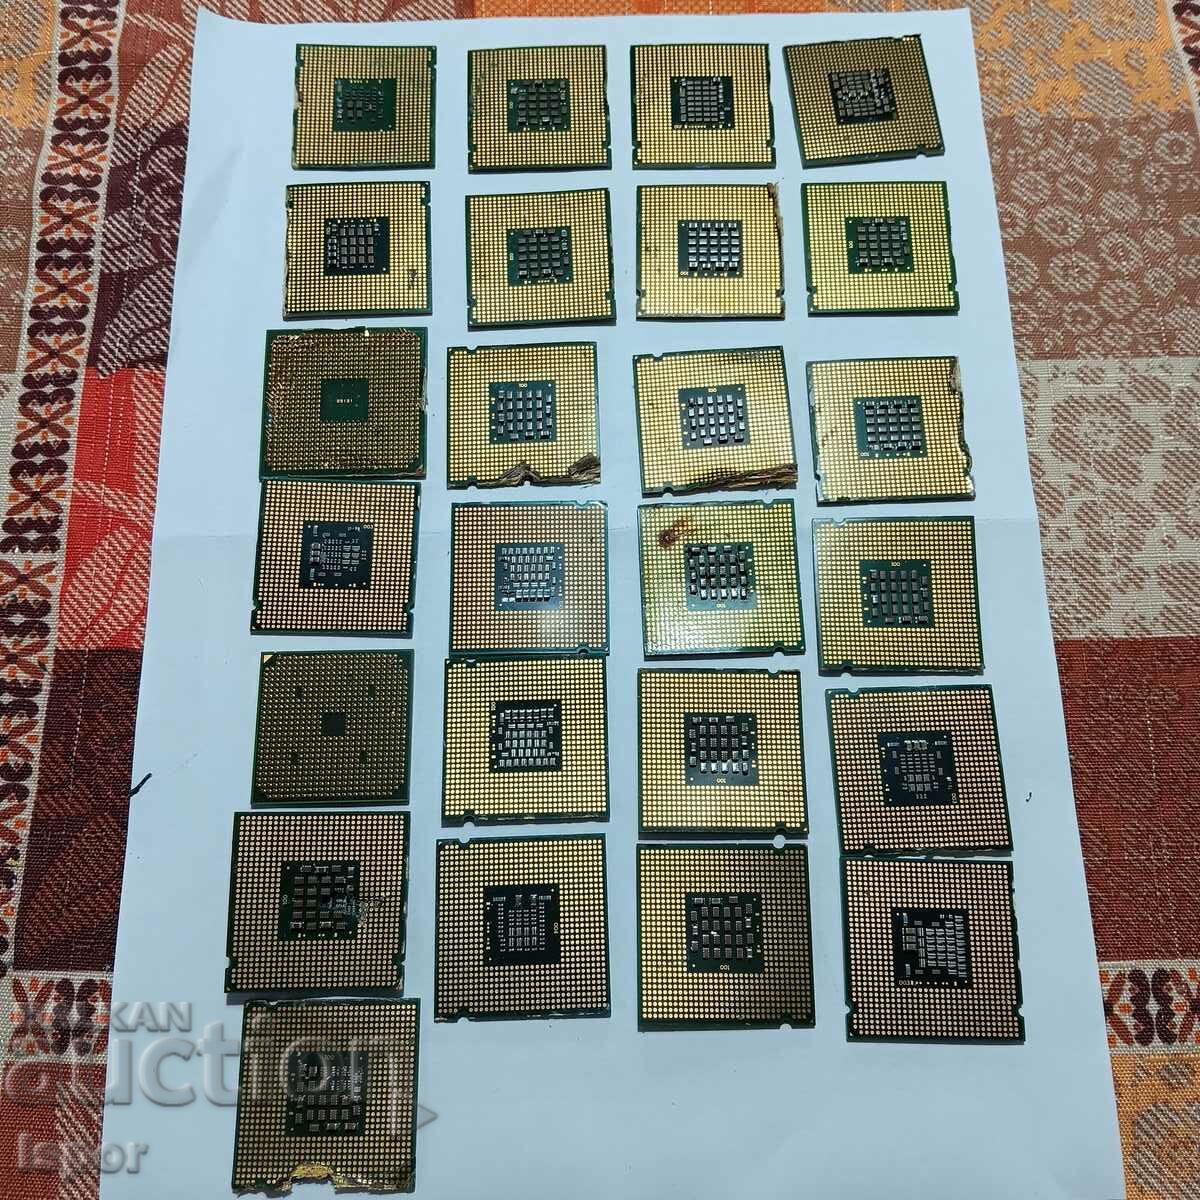 Gold-plated processors 25pcs /